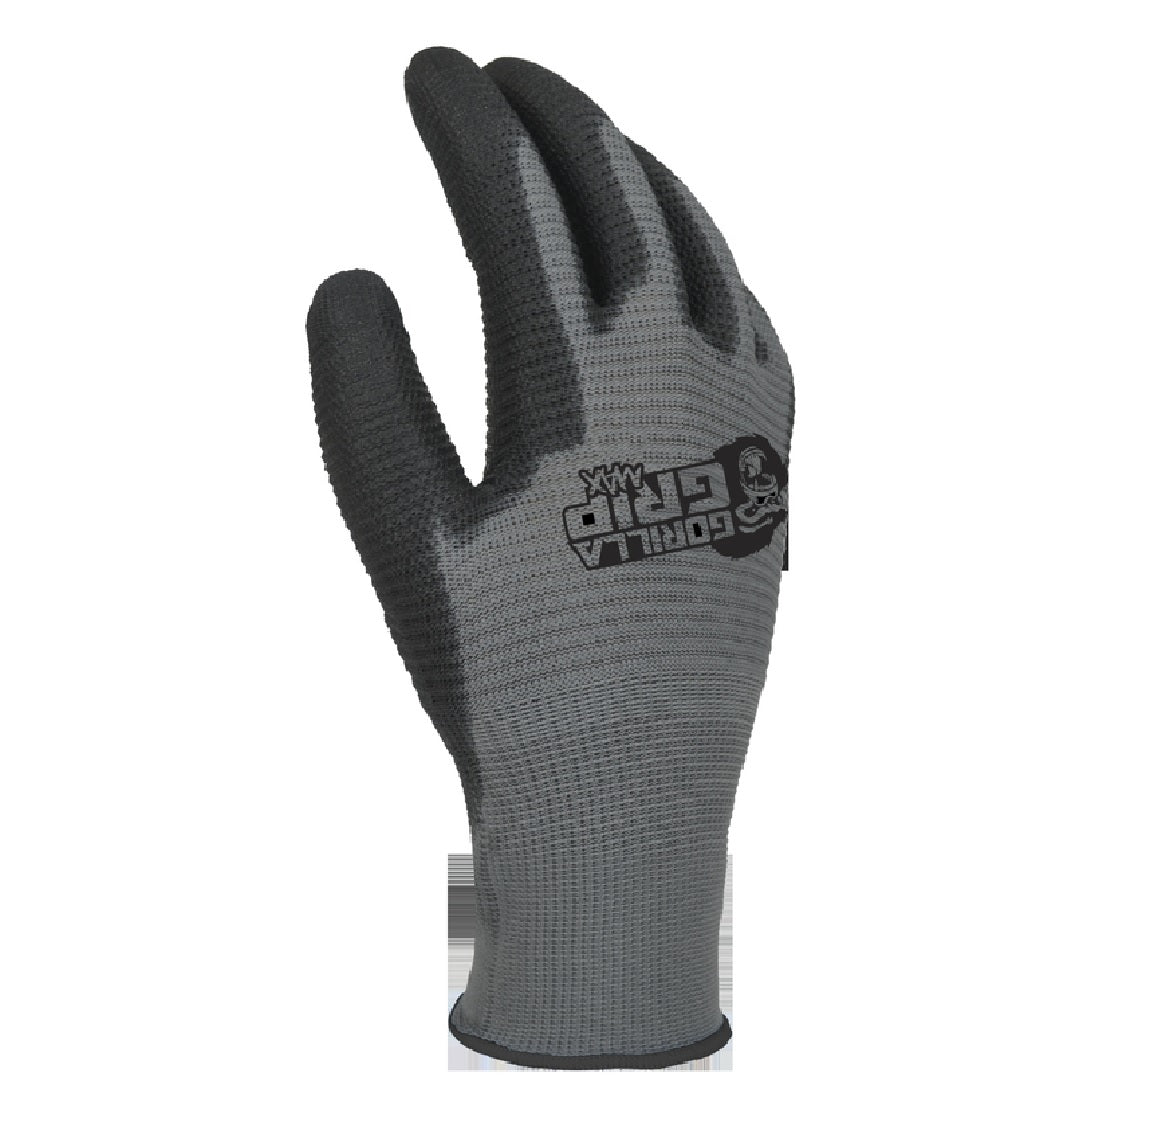 Gorilla Grip 25322-26 Max Dipped Gloves, Black/Gray